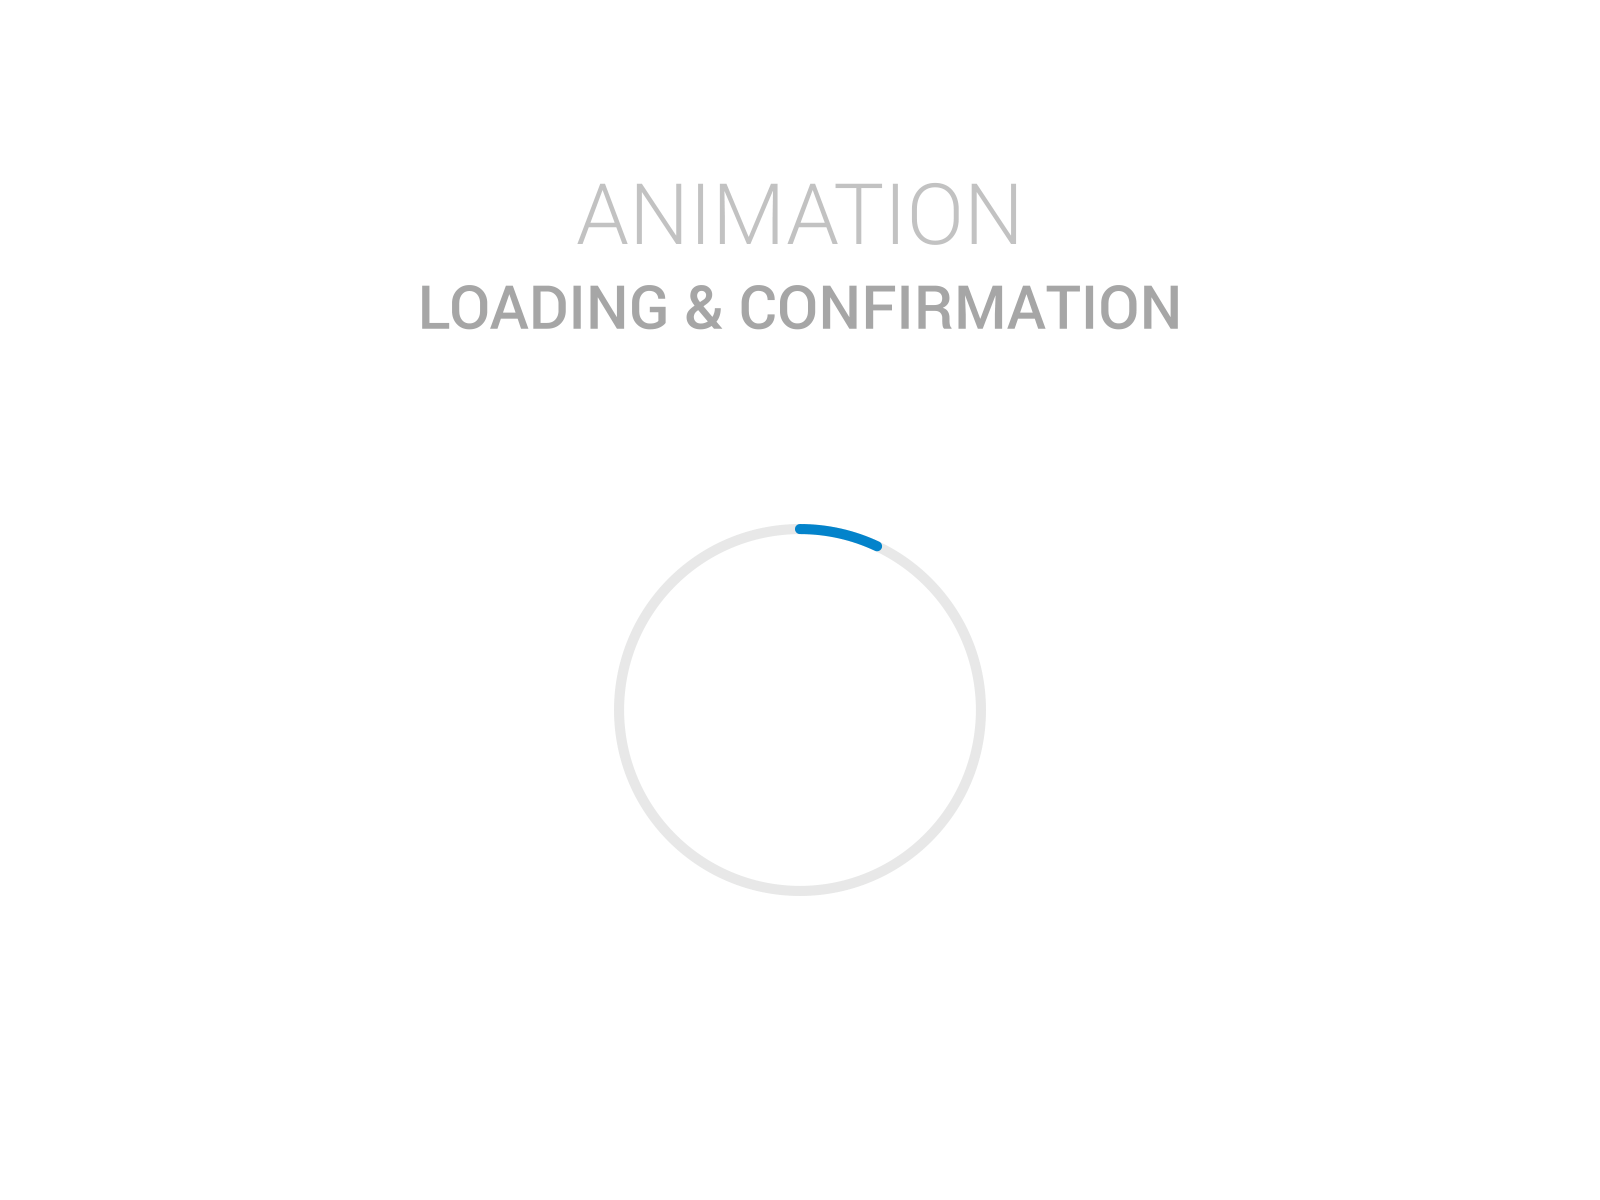 Animation - Loading & Confirmation